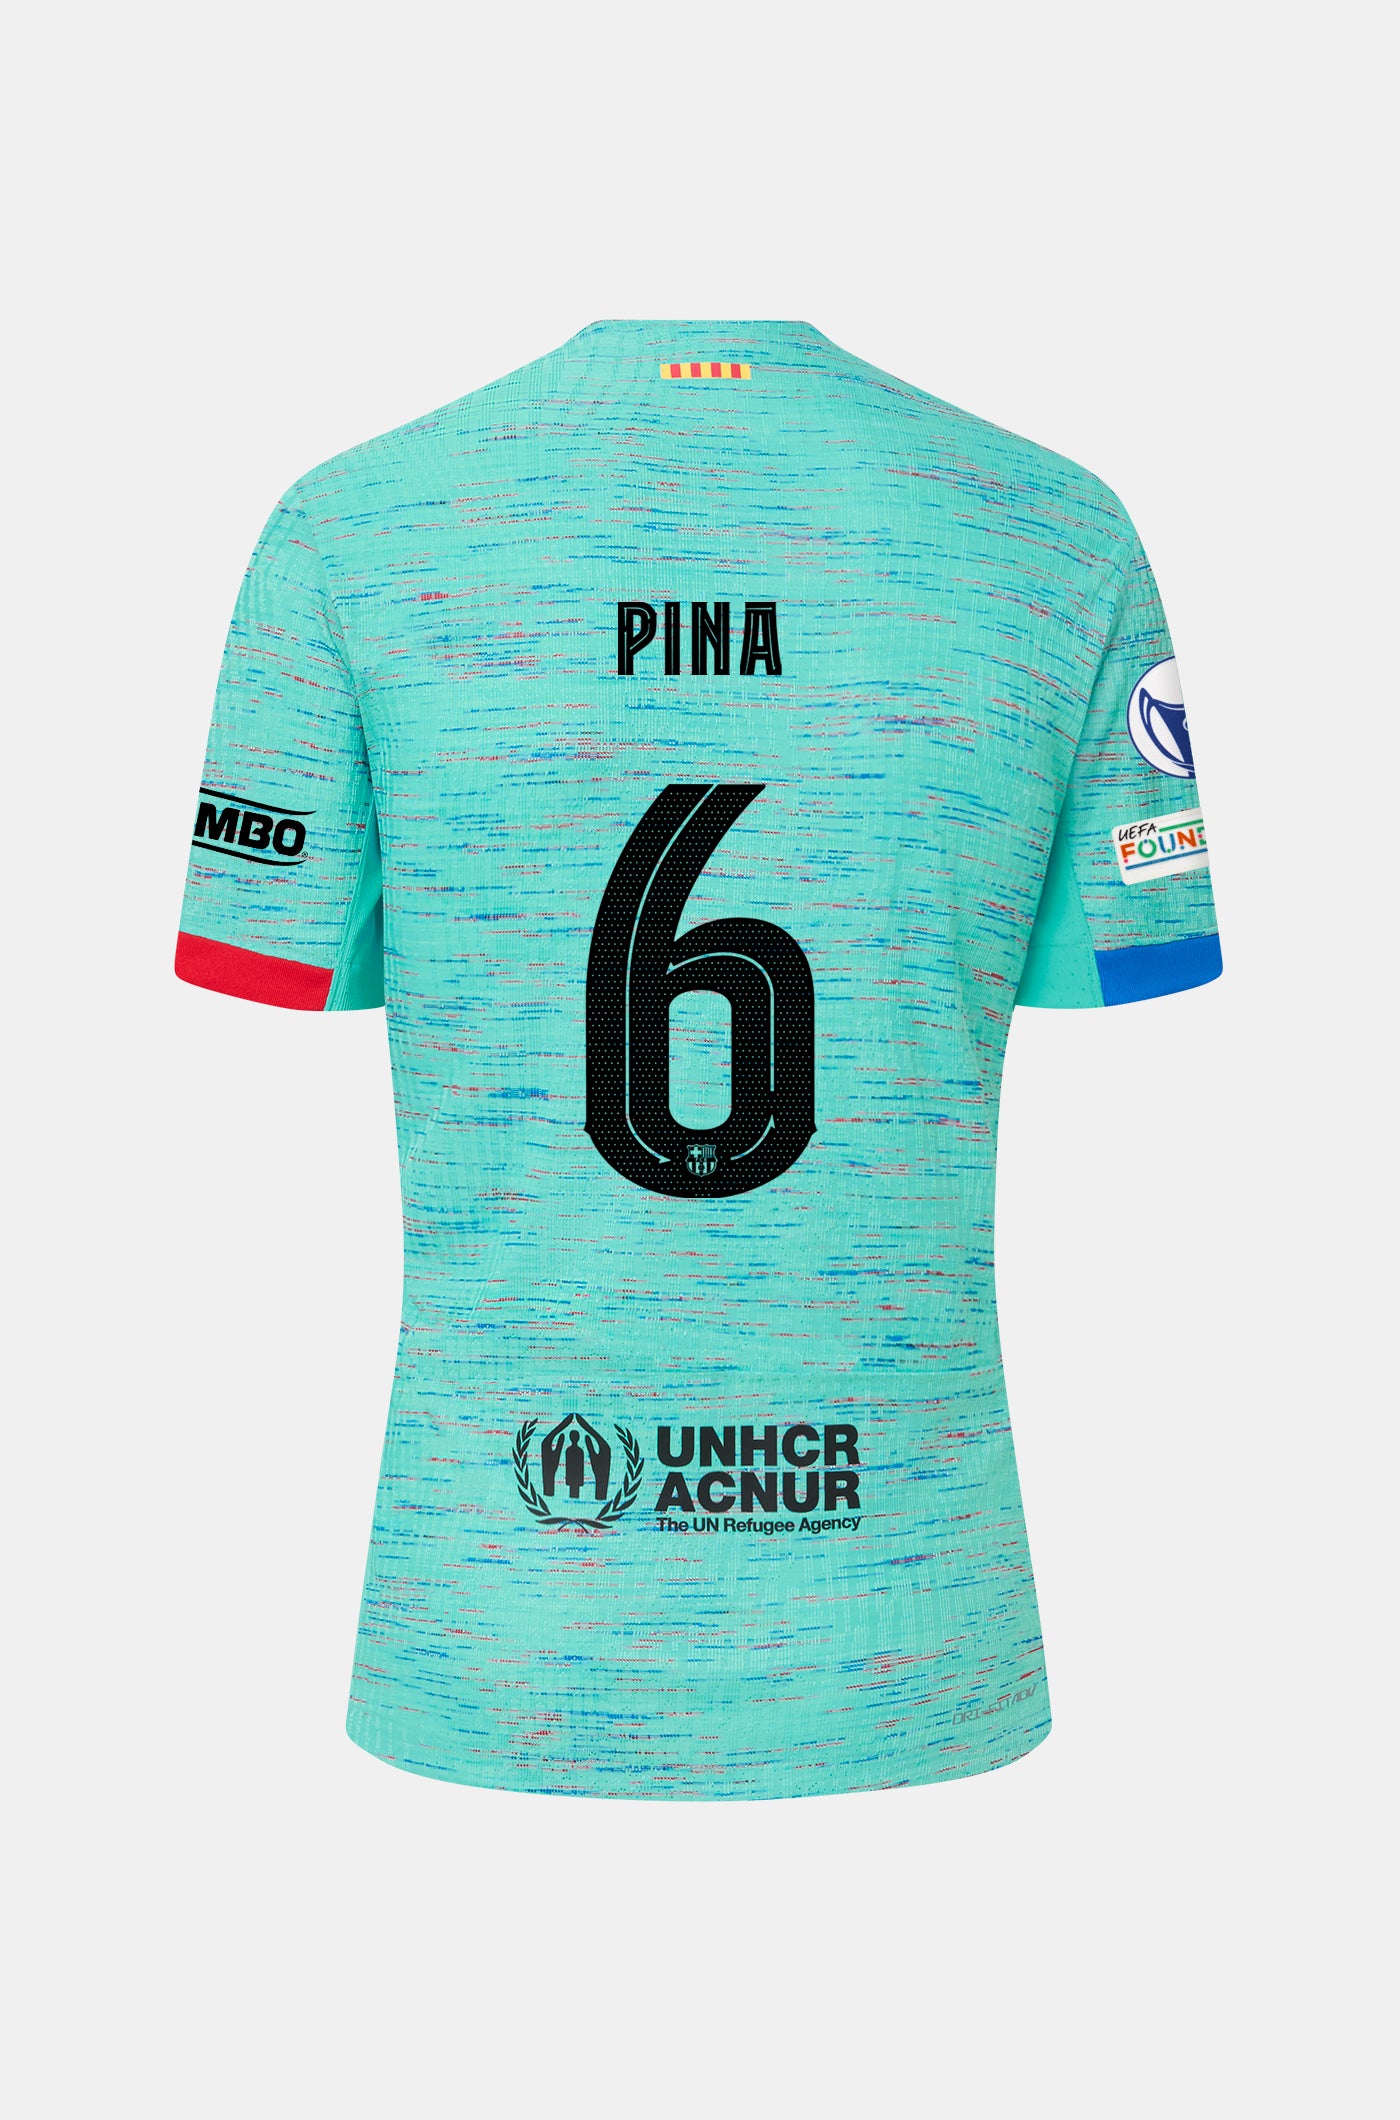 UWCL FC Barcelona third shirt 23/24 - Women  - PINA